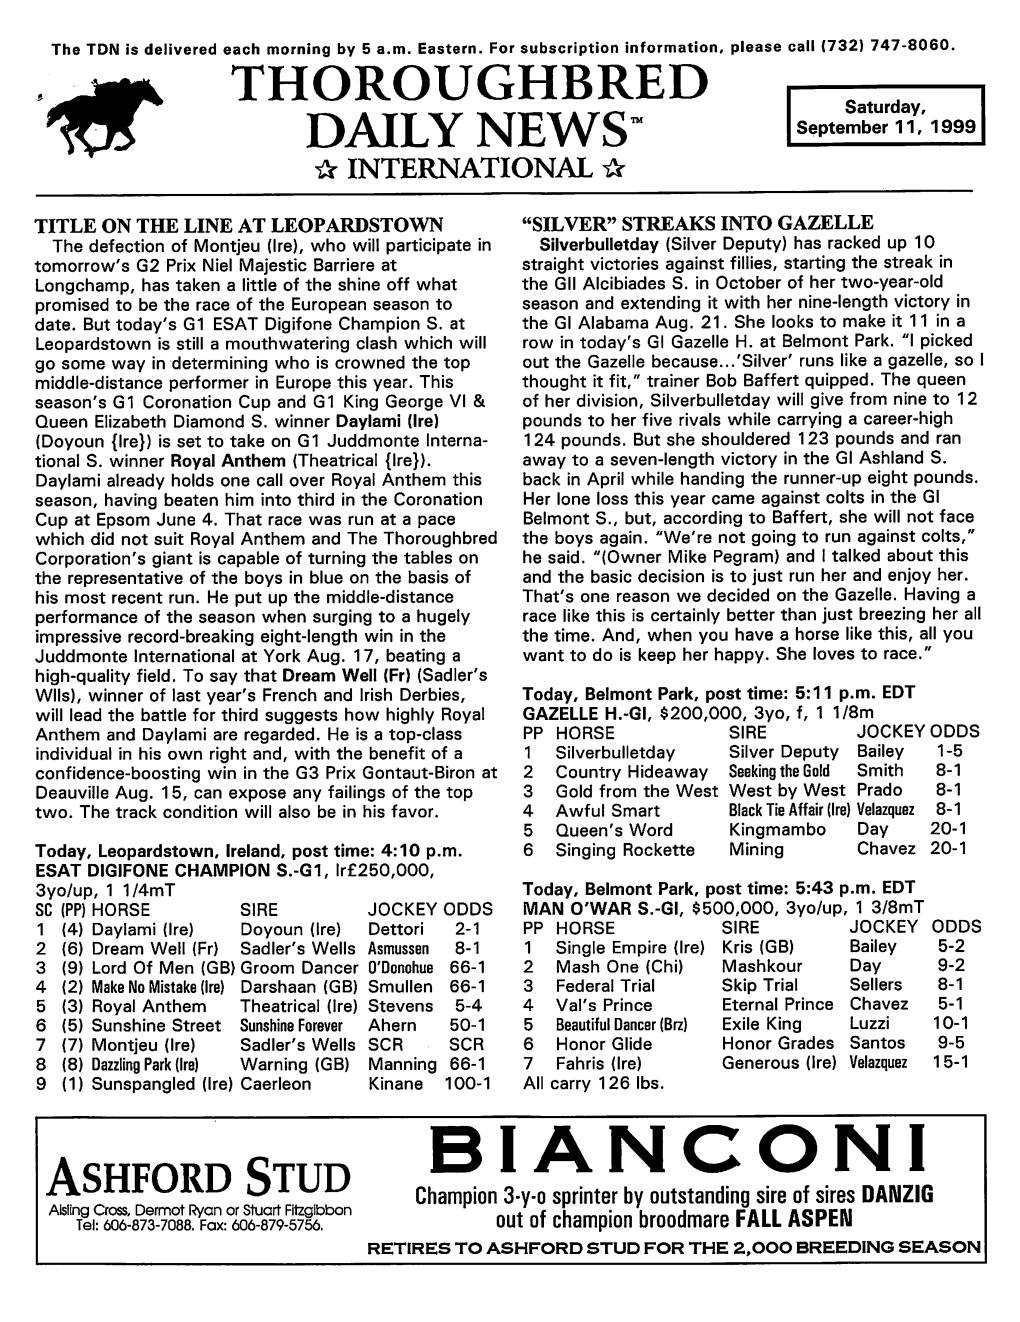 BIANCONI Ashford Stud Champion 3-Y-A Sprinter by Outstanding Sire Ofsires DANZIG Alsling Cross, Dermot Ryan Or Stuart Fitzgibbon Tel: 606-873-7088